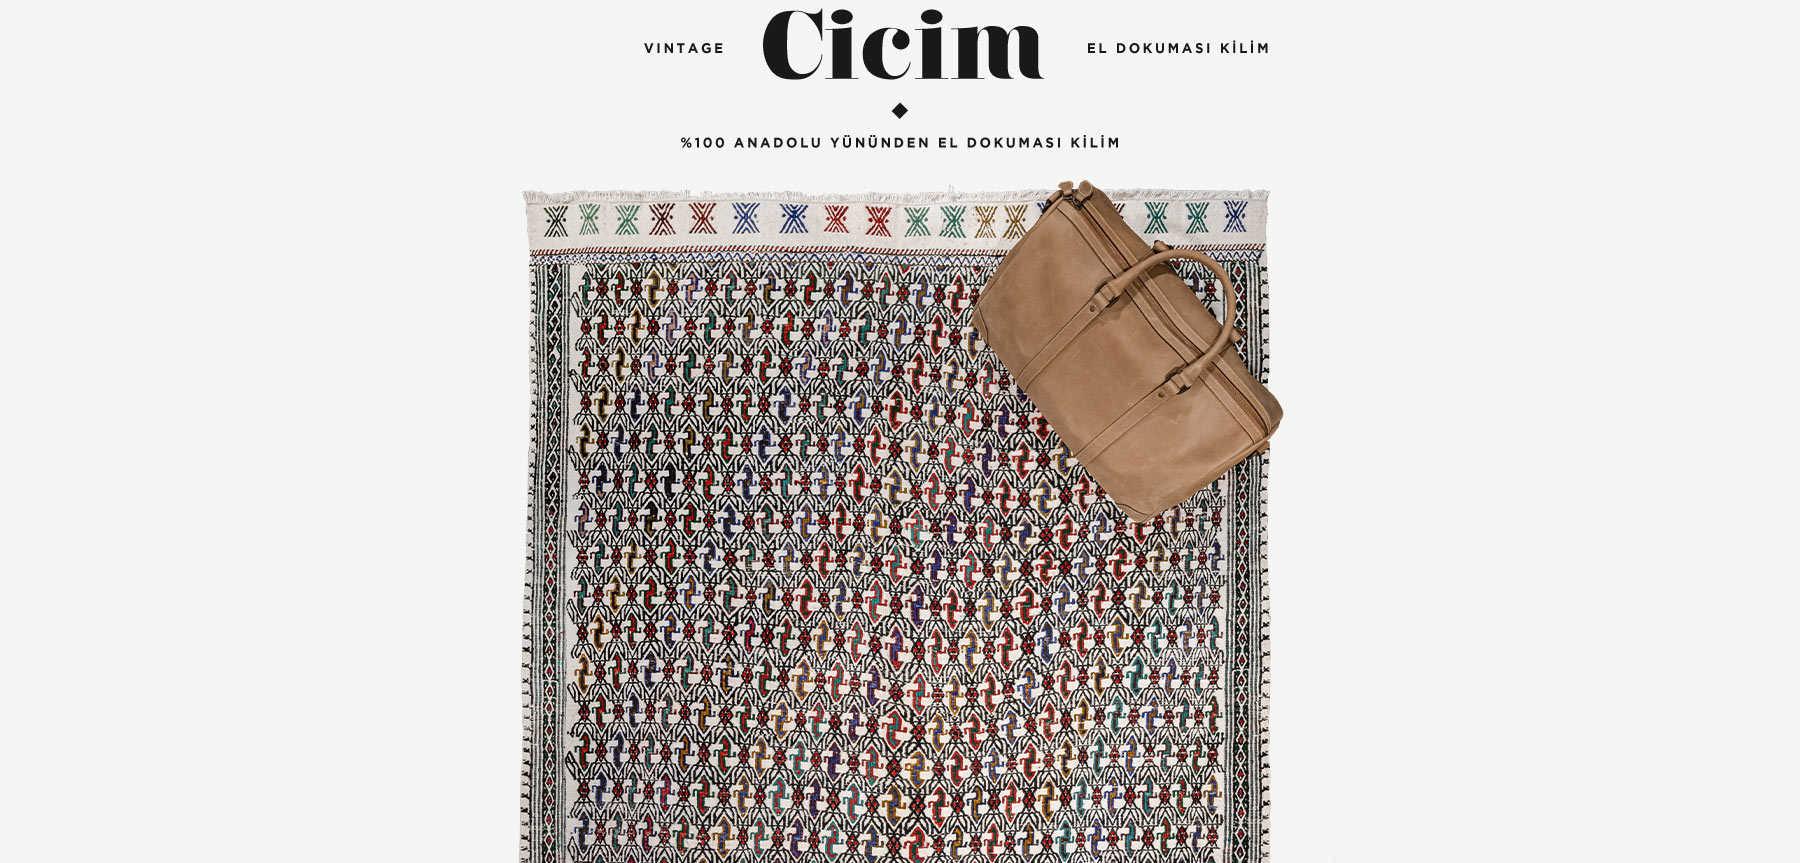 Vintage Konya Cicim El Dokuması Kilim 2,57 m2'in resmi